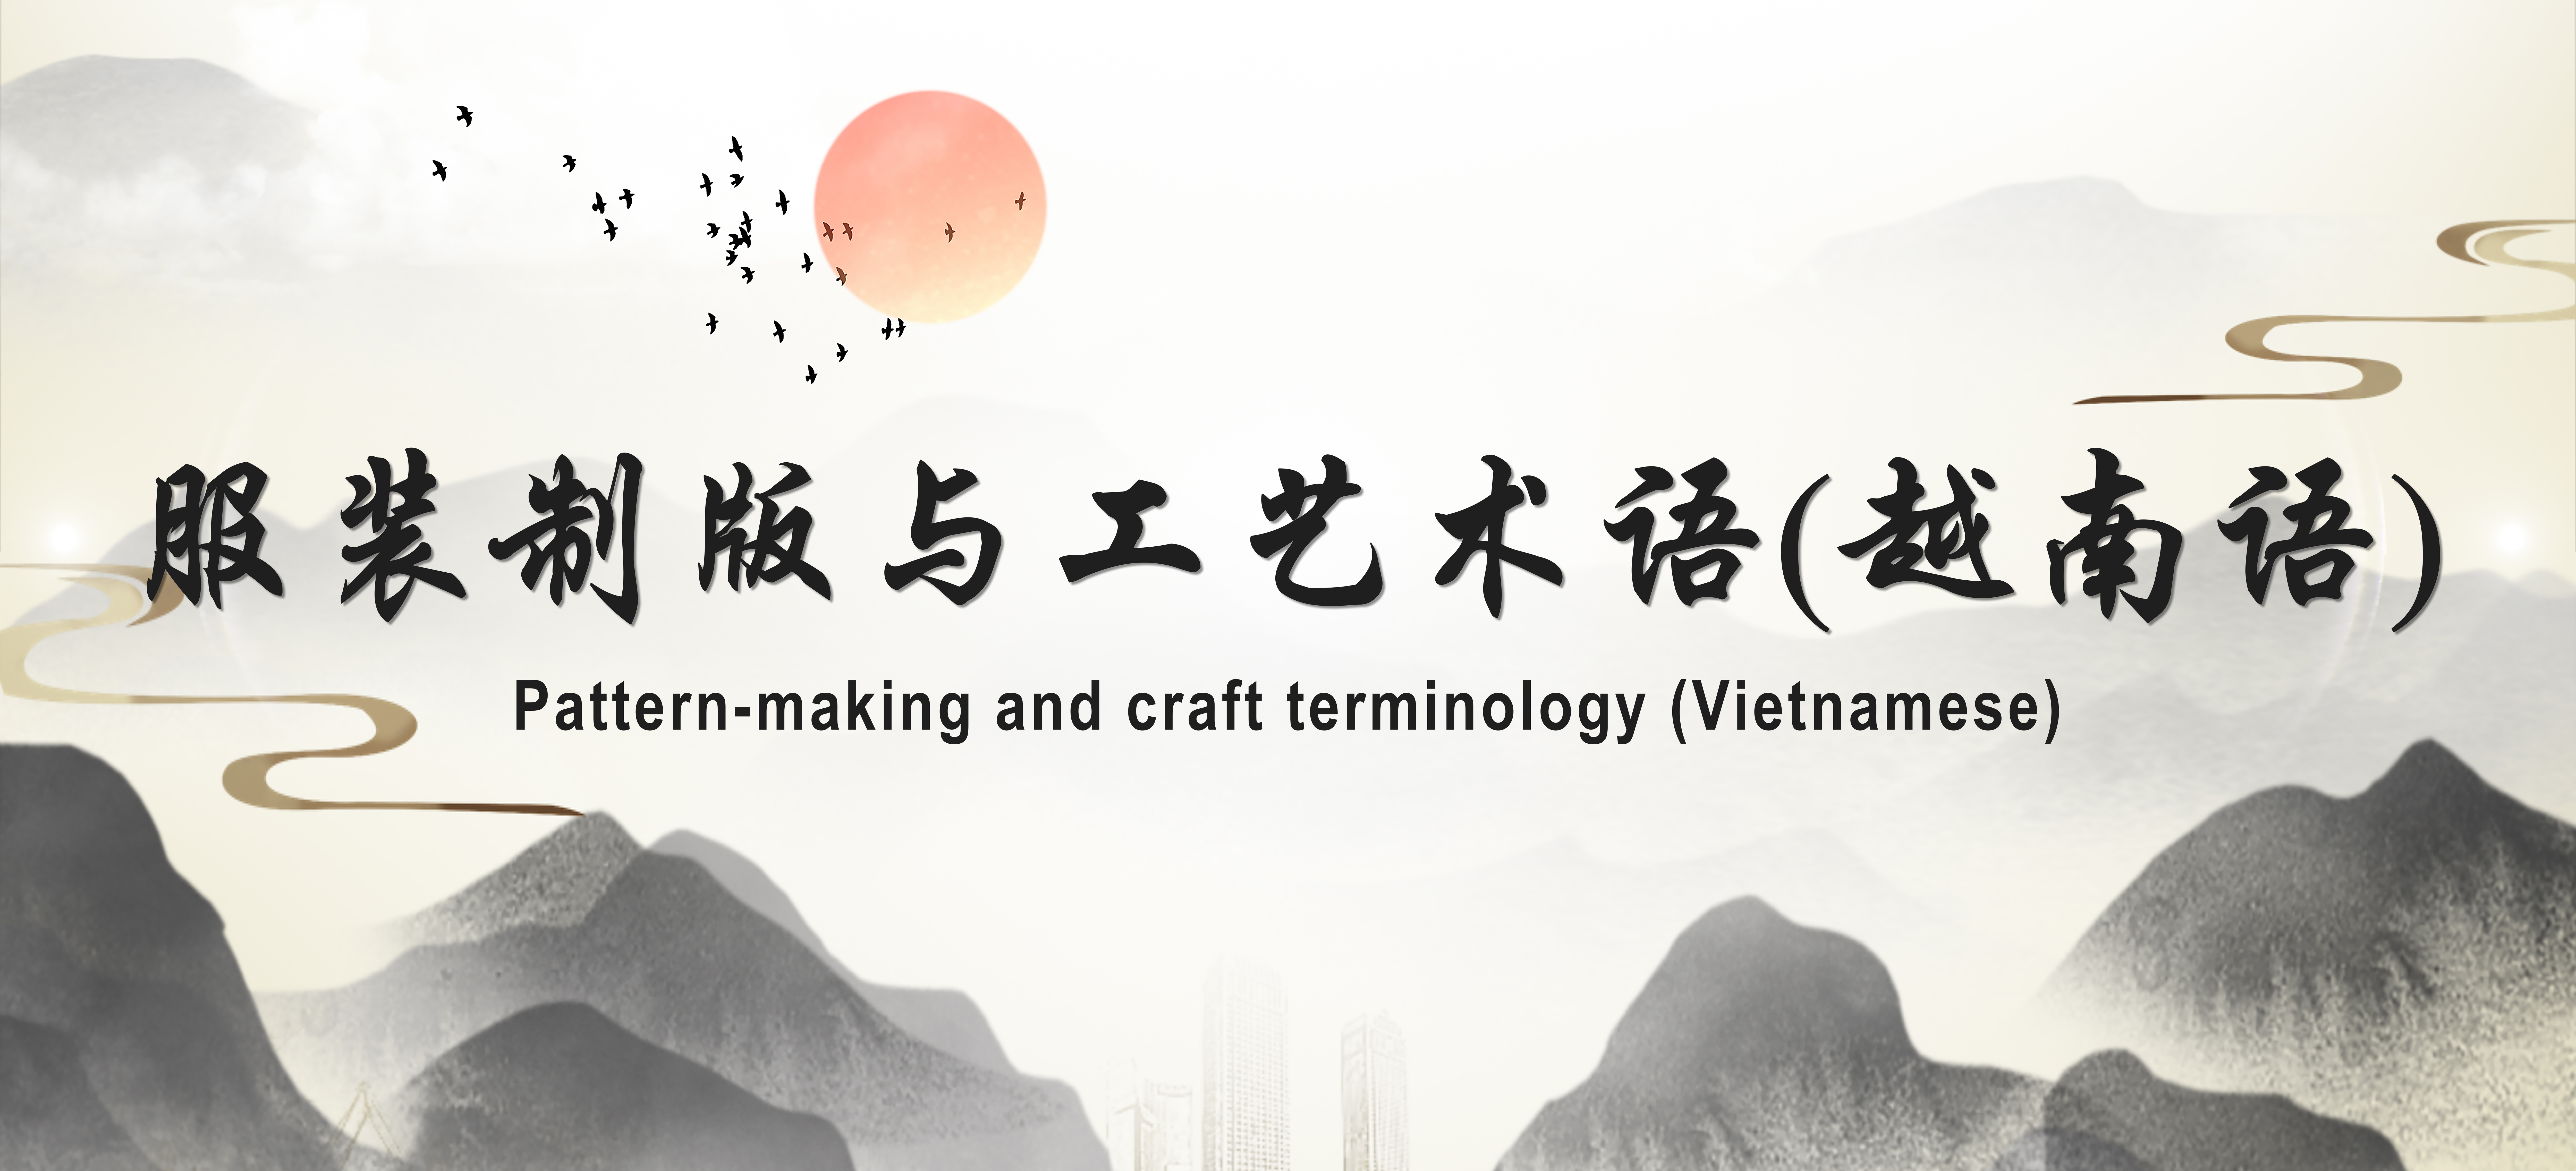 Pattern-making and craft terminology (Vietnamese)